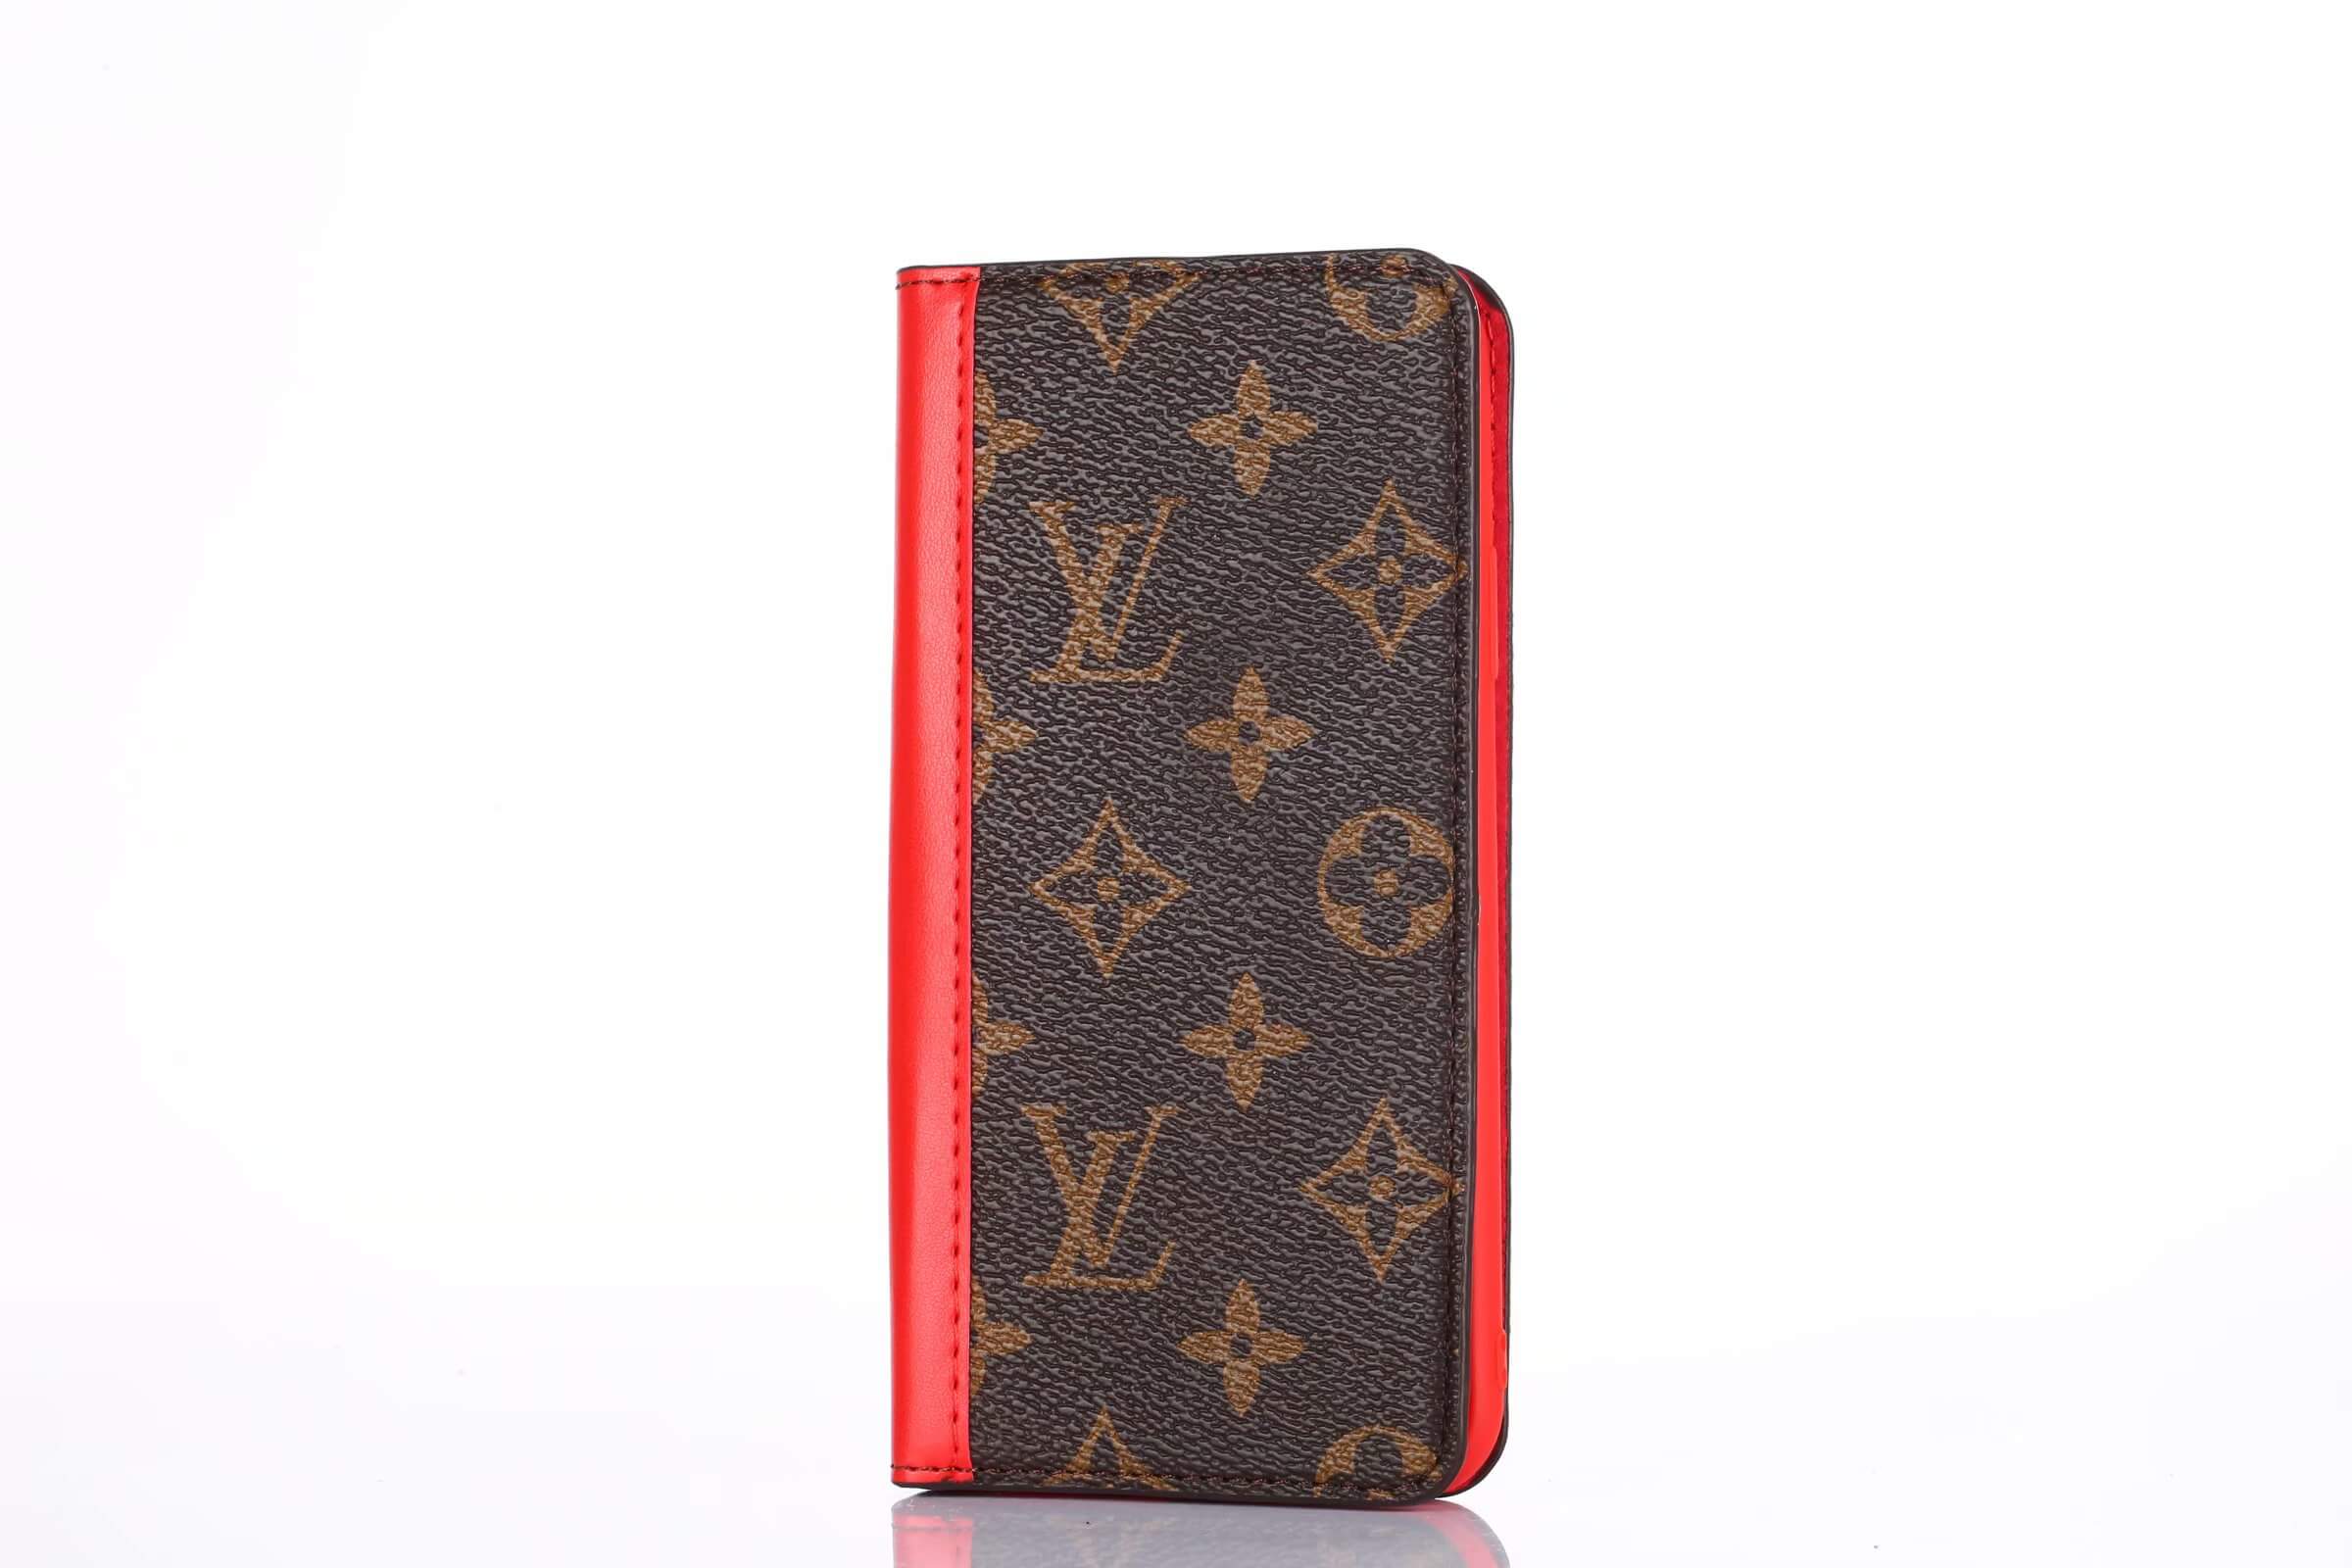 Louis Vuitton Wallet Folio Flip Case for iPhone Xs Max - Luxury